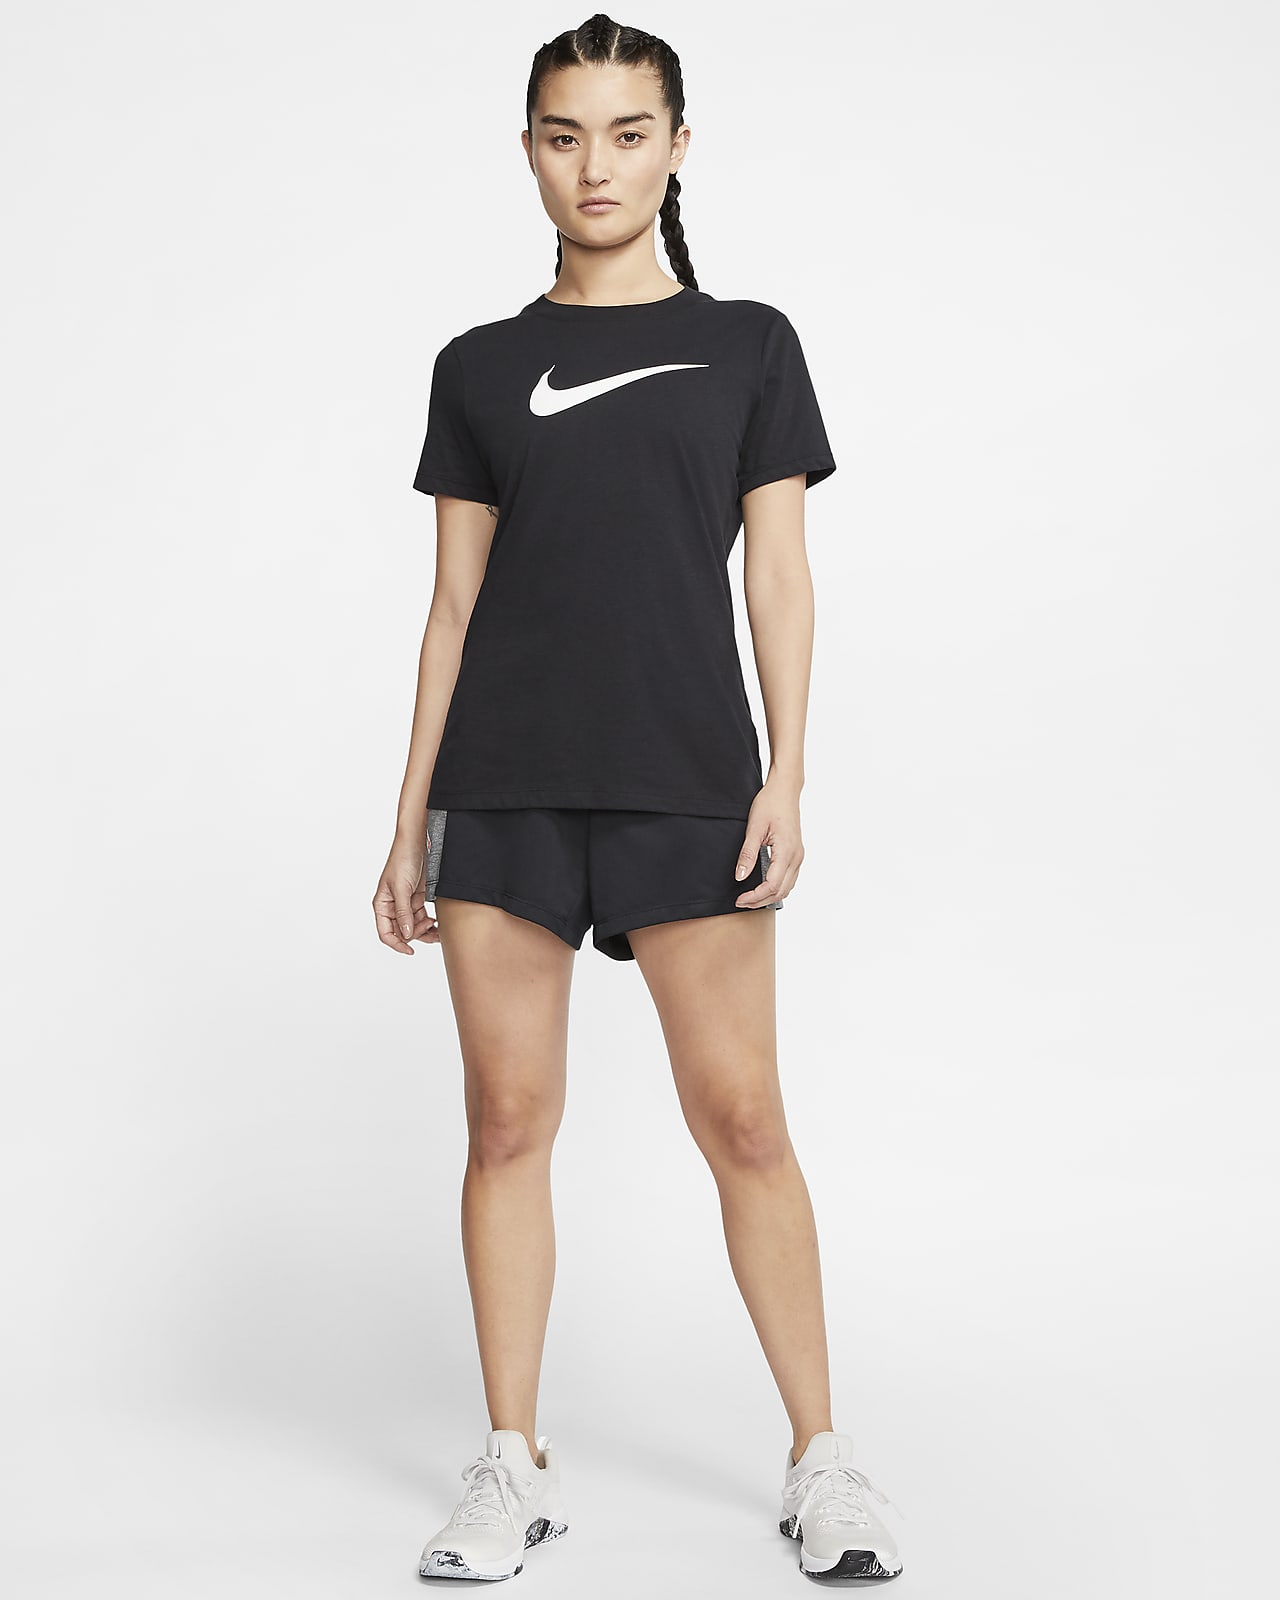 Nike Dri FIT Women's Training T Shirt